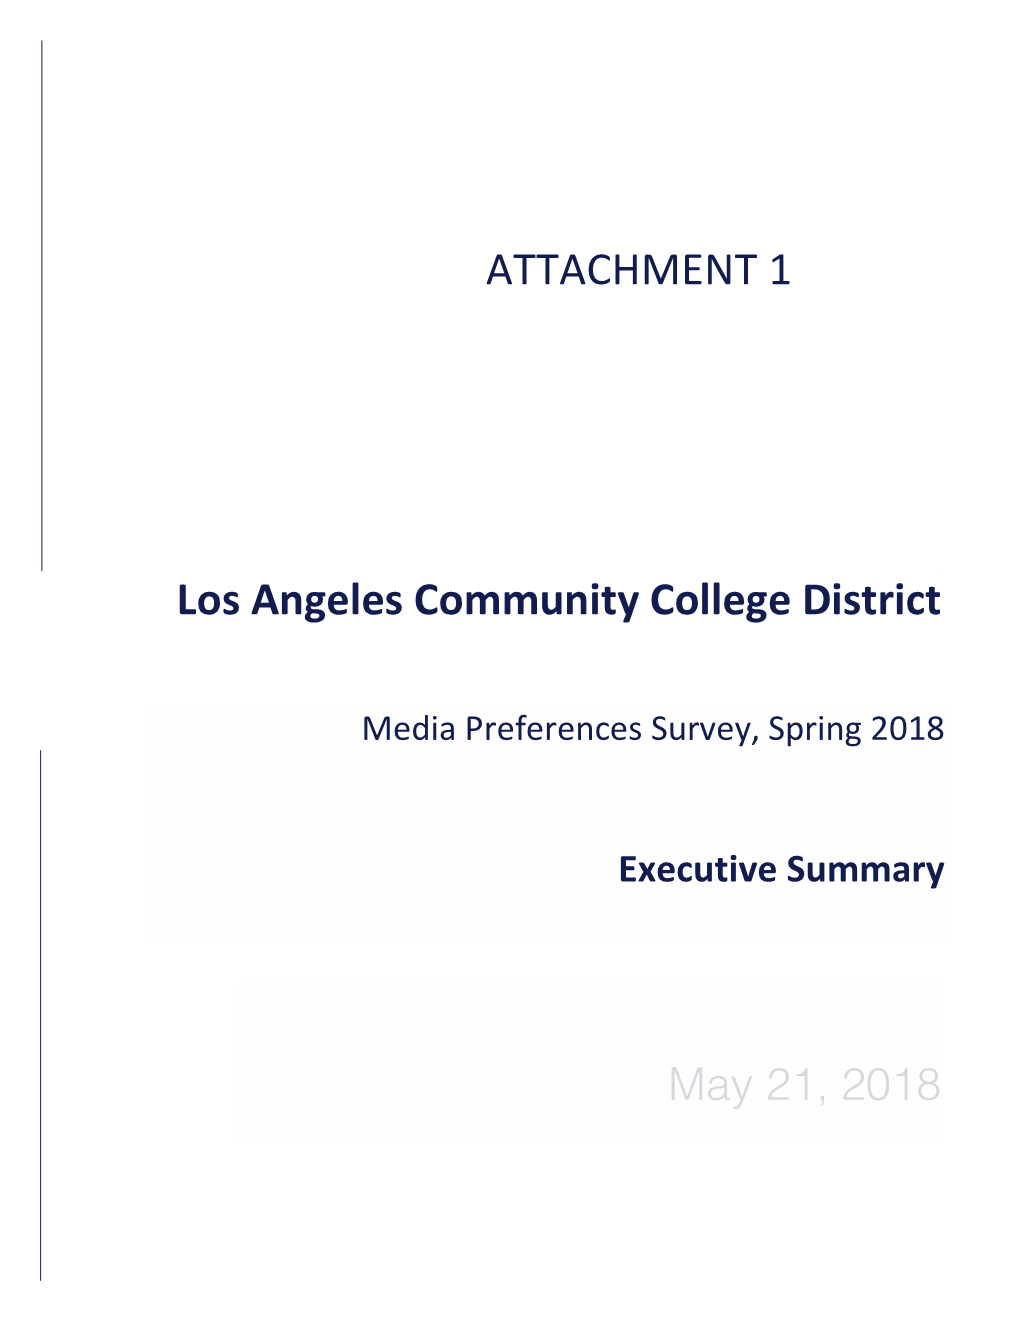 Los Angeles Community College District ATTACHMENT 1